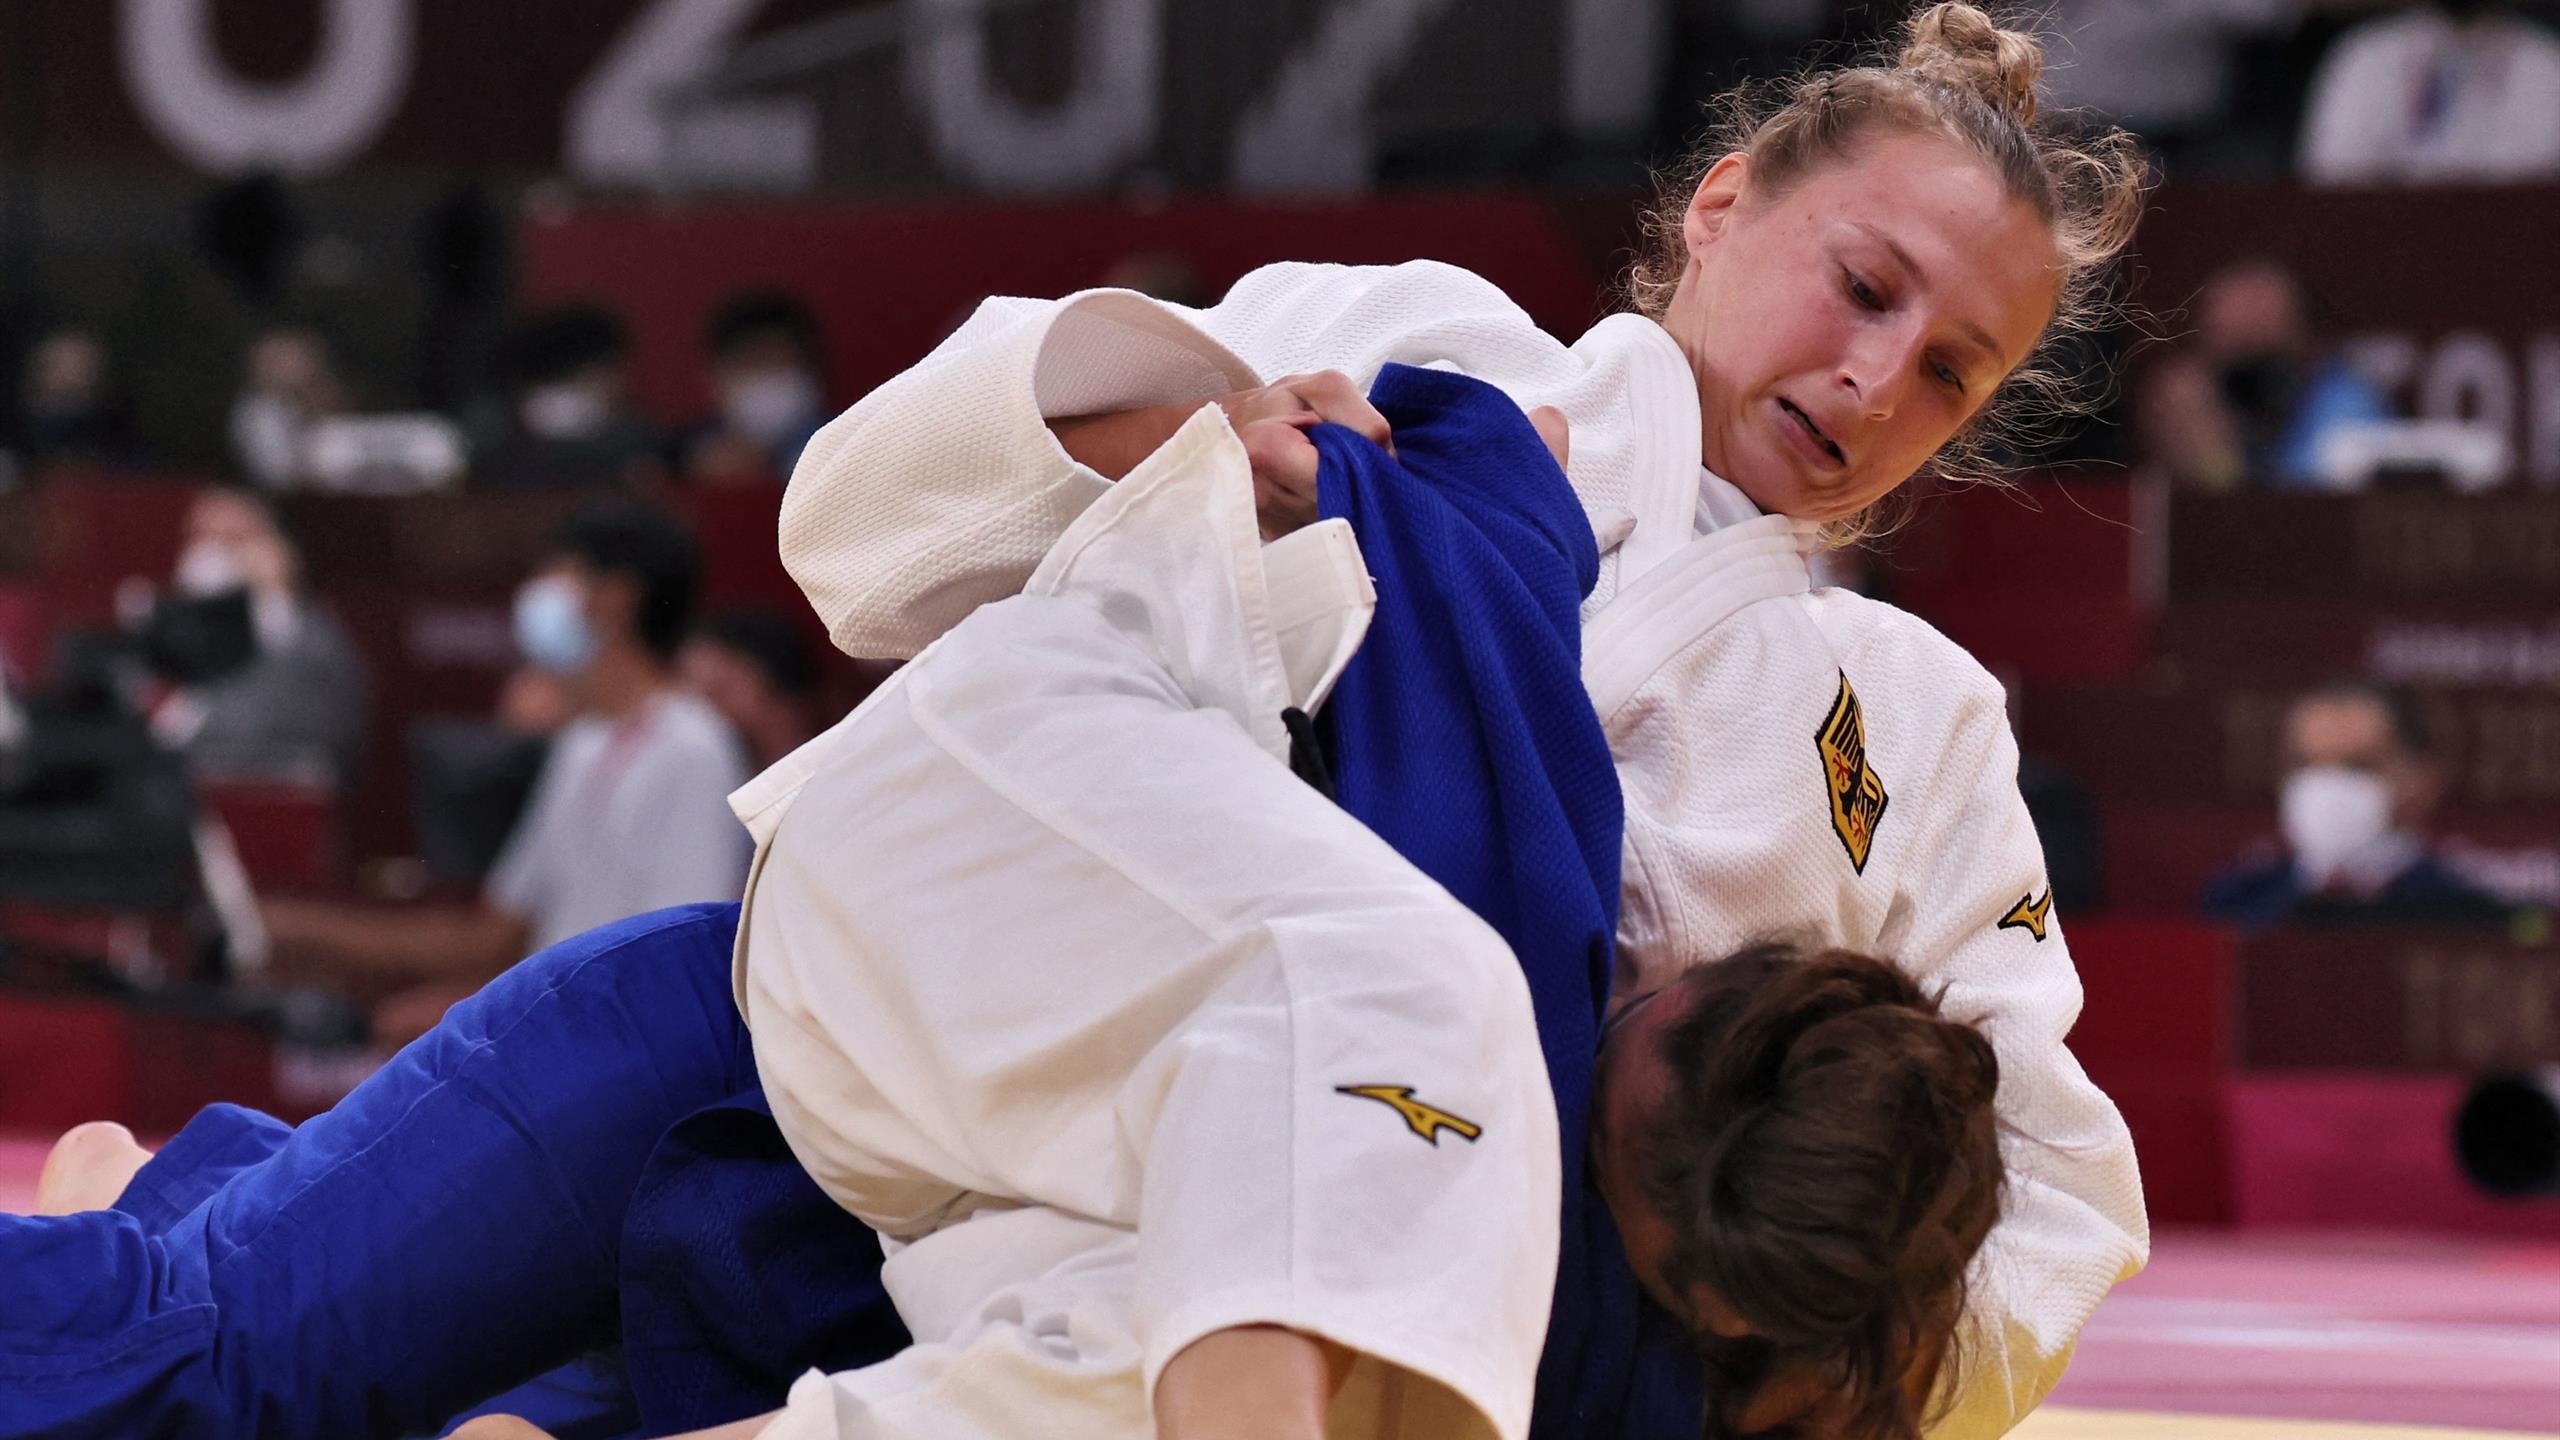 Judo: Martyna Trajdos, A German judoka, 2015 European Judo Championships gold medalist. 2560x1440 HD Background.